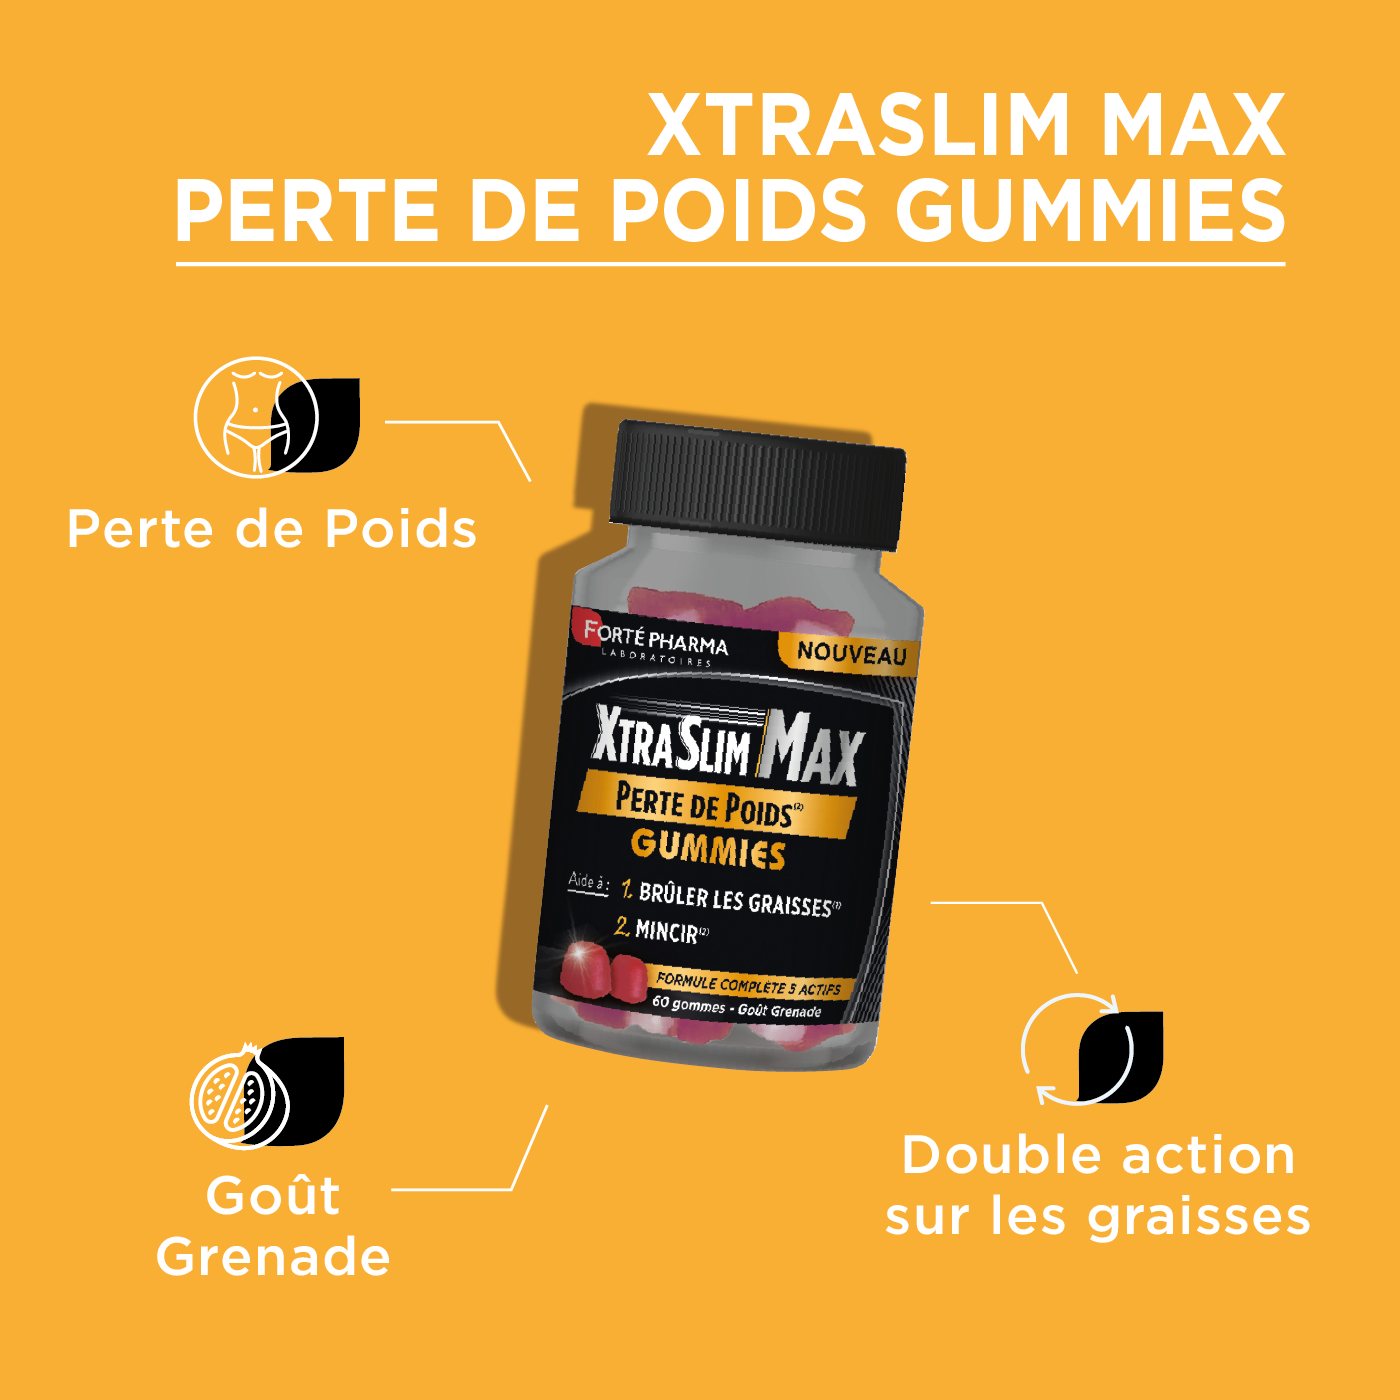 XtraSlim Max Perte de poids Gummies